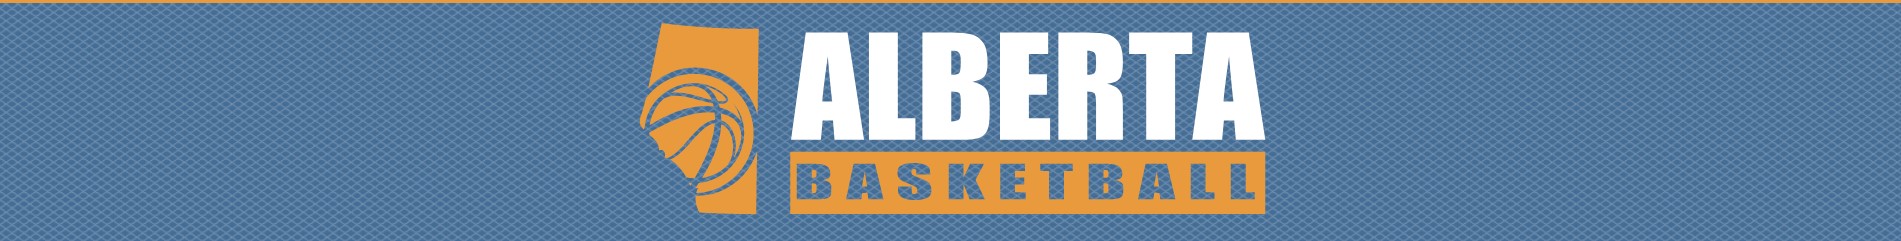 Alberta Basketball Association | Organizational Profile, Work & Jobs